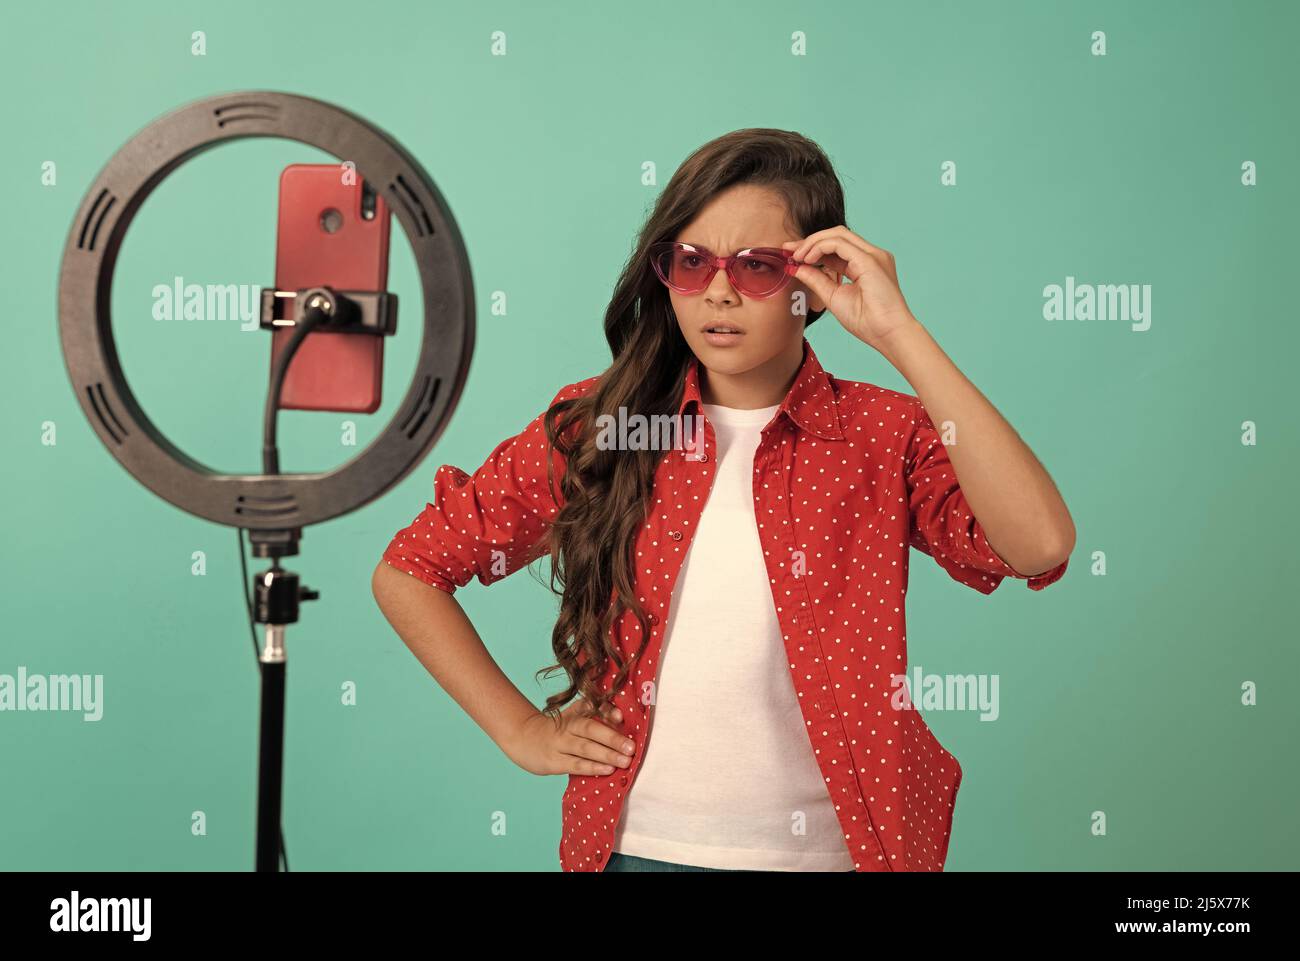 serious teen girl use selfie led. kid beauty blogger. childhood. child in sunglasses. Stock Photo